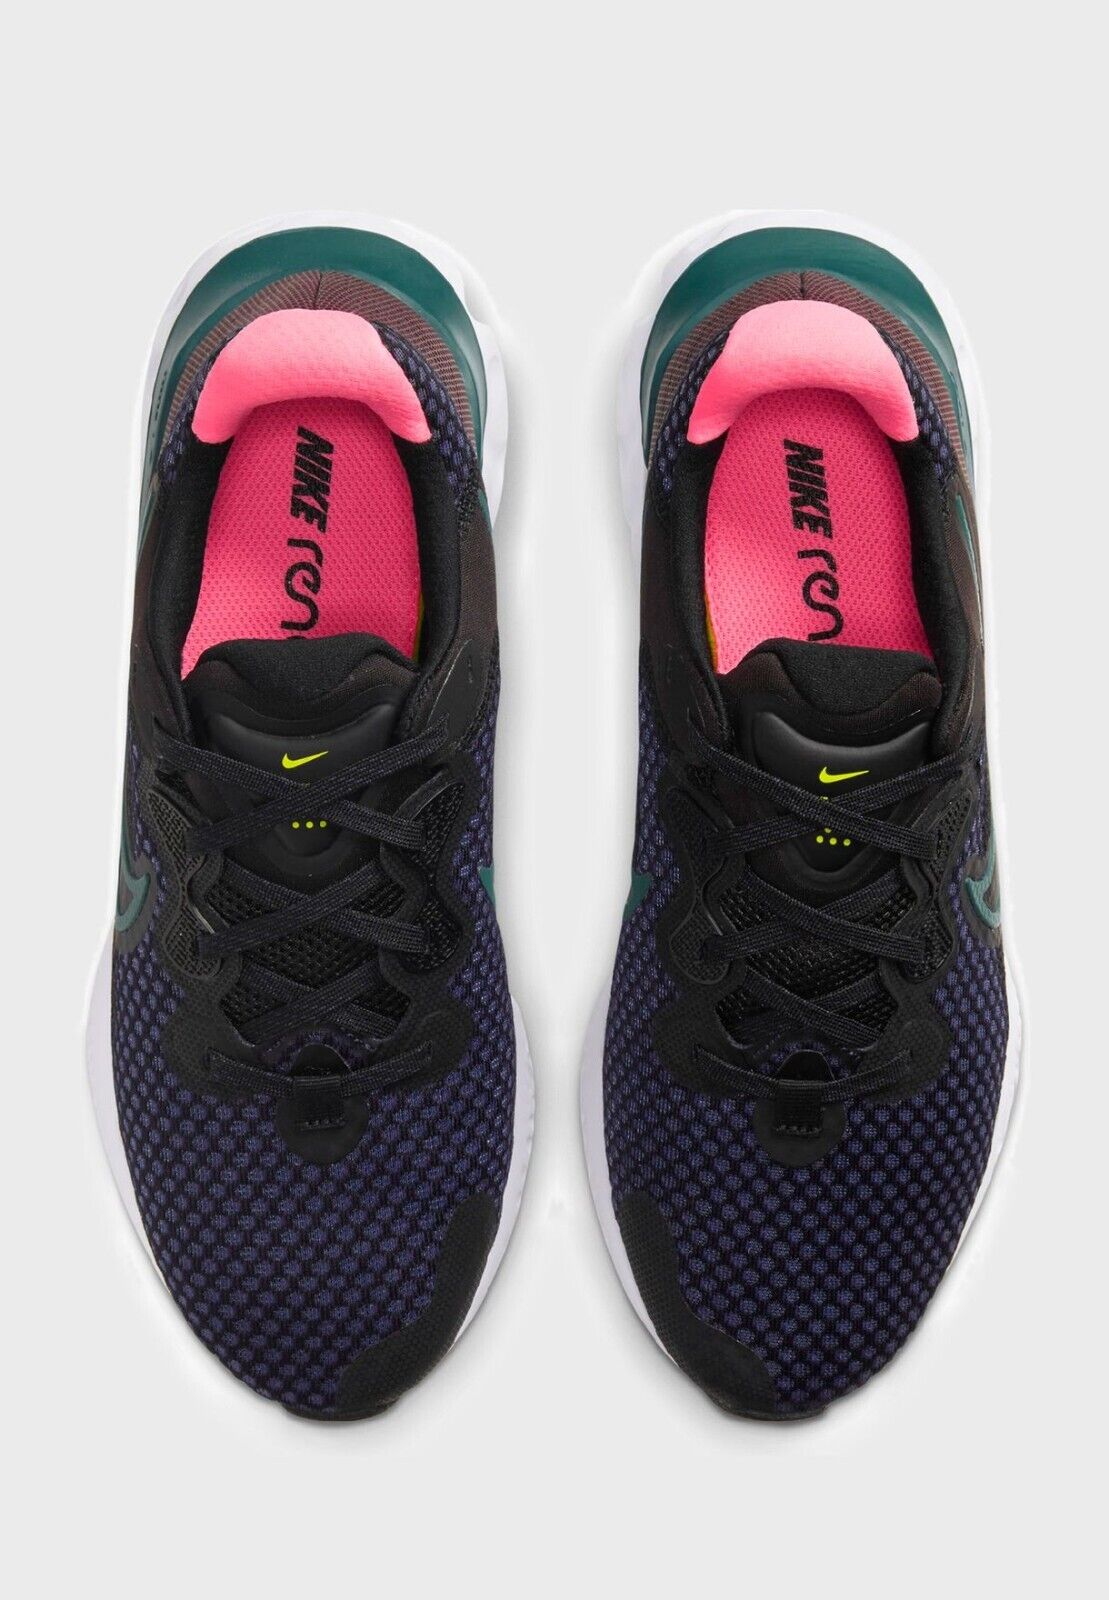 Women's Nike Renew Run 2 Running Shoes, CU3505 004 Multi Sizes Black/Blackened Blue